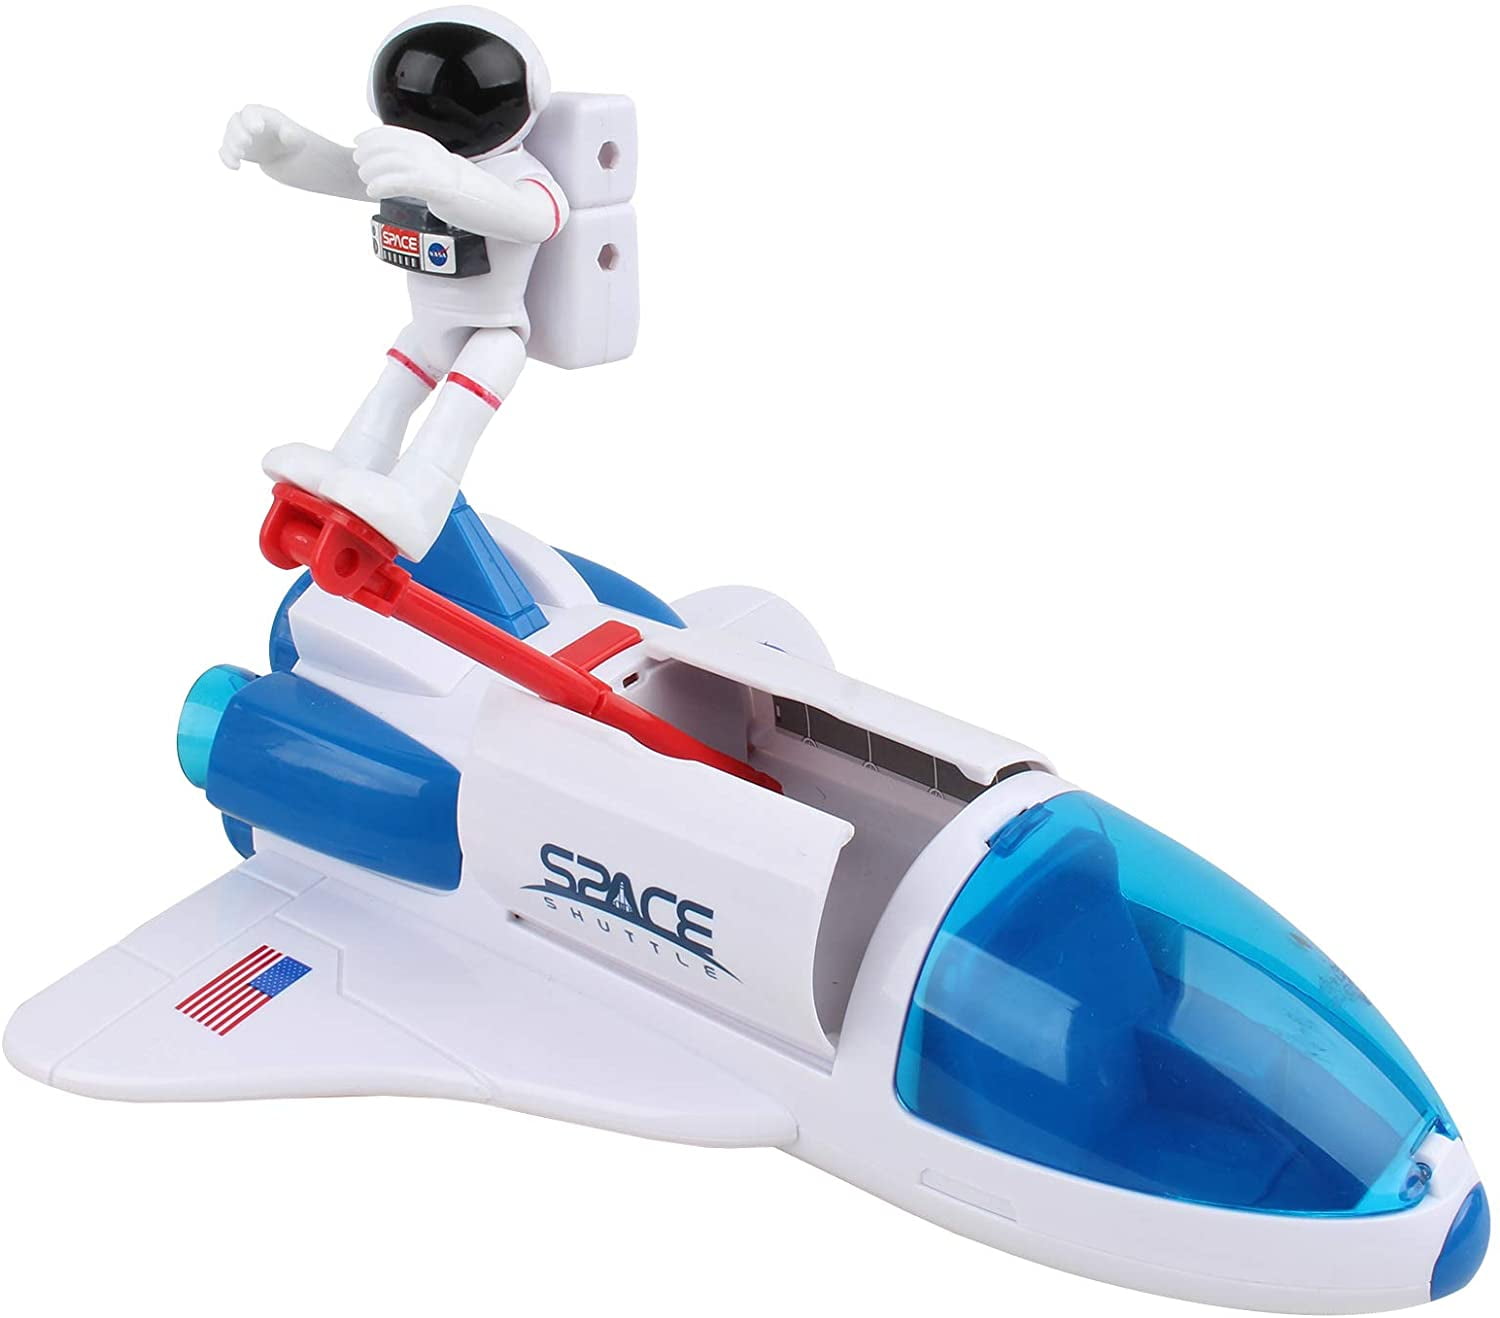 Daron NASA Space Adventure Toy Set: Space Shuttle Bag 3 Astronauts Capsule 